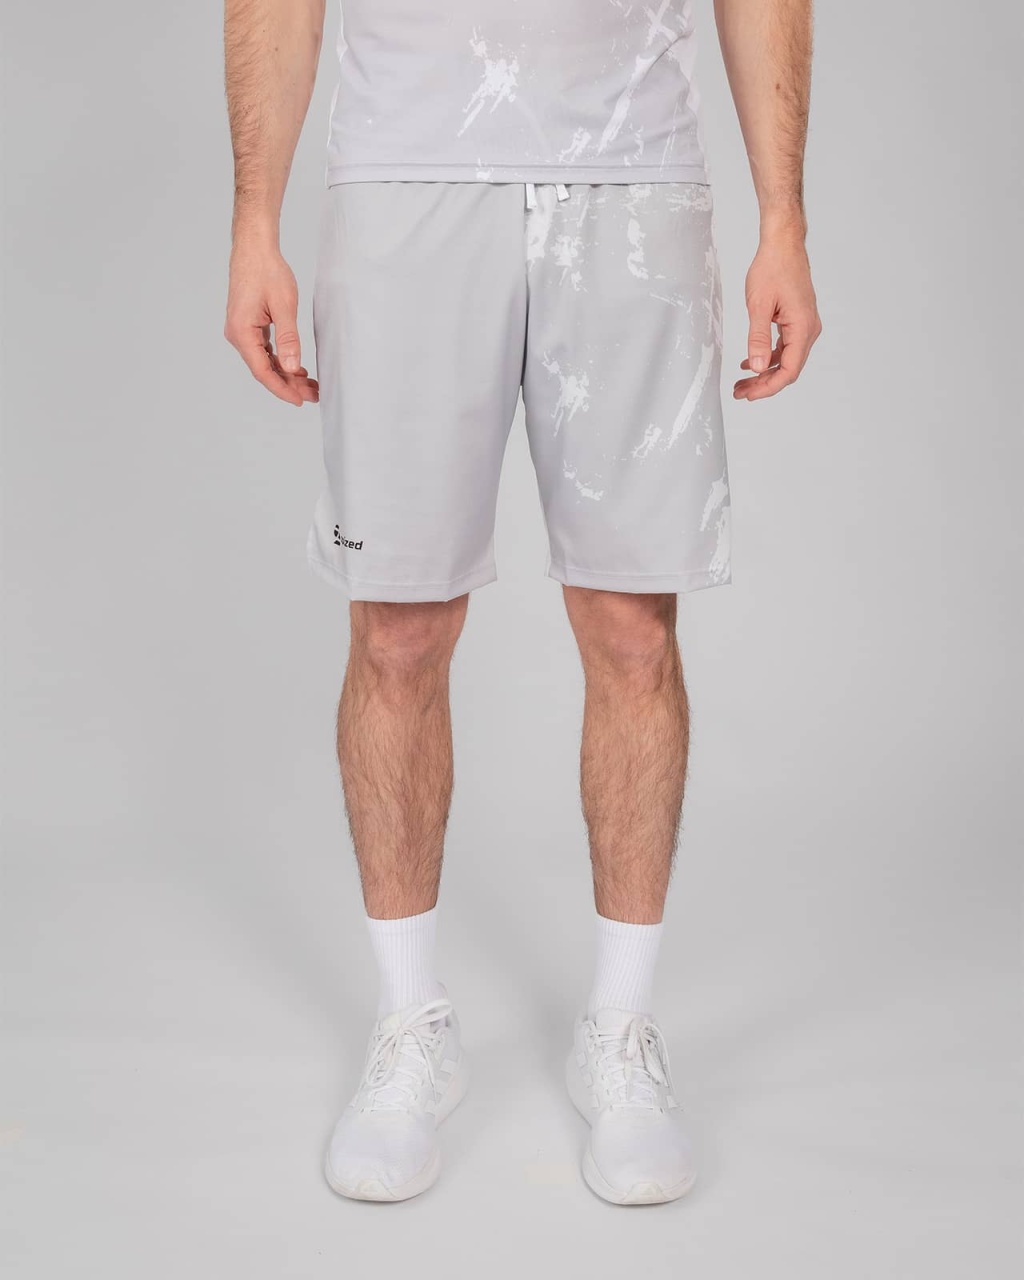 Men’s fitness shorts